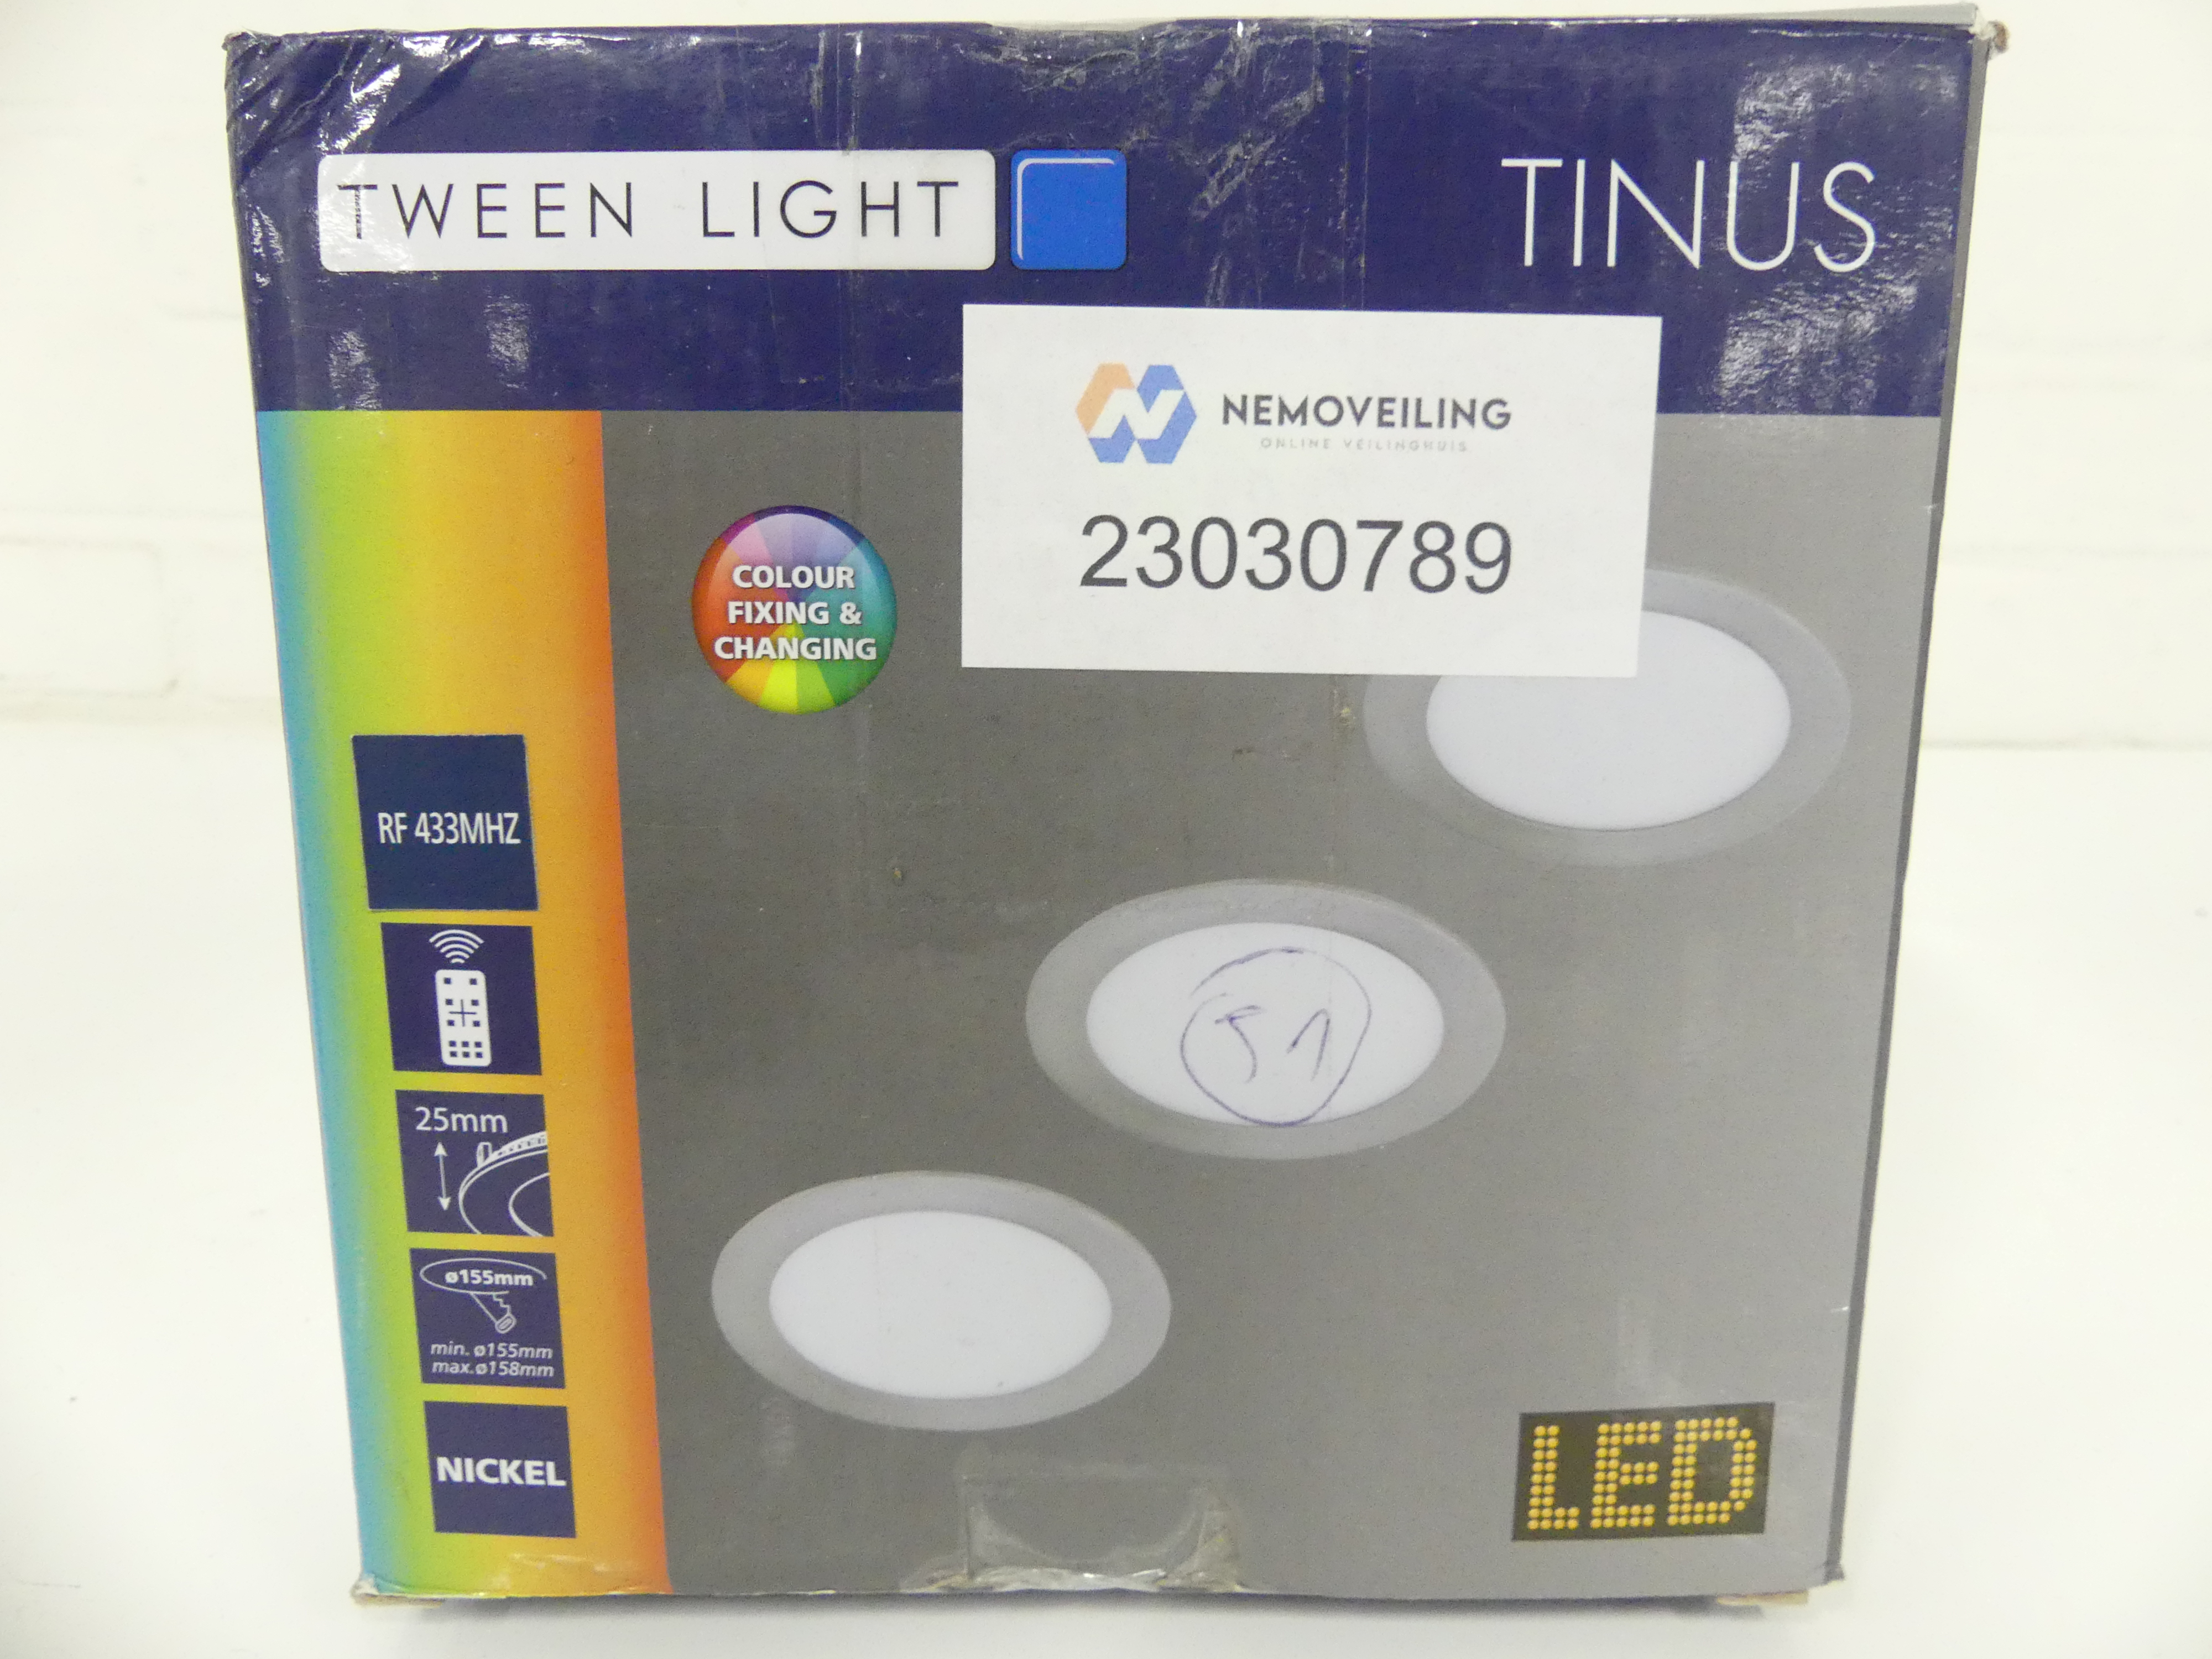 Tween lights inbouwspots Tinus 4,8W 155mm, Colour fixing & changing